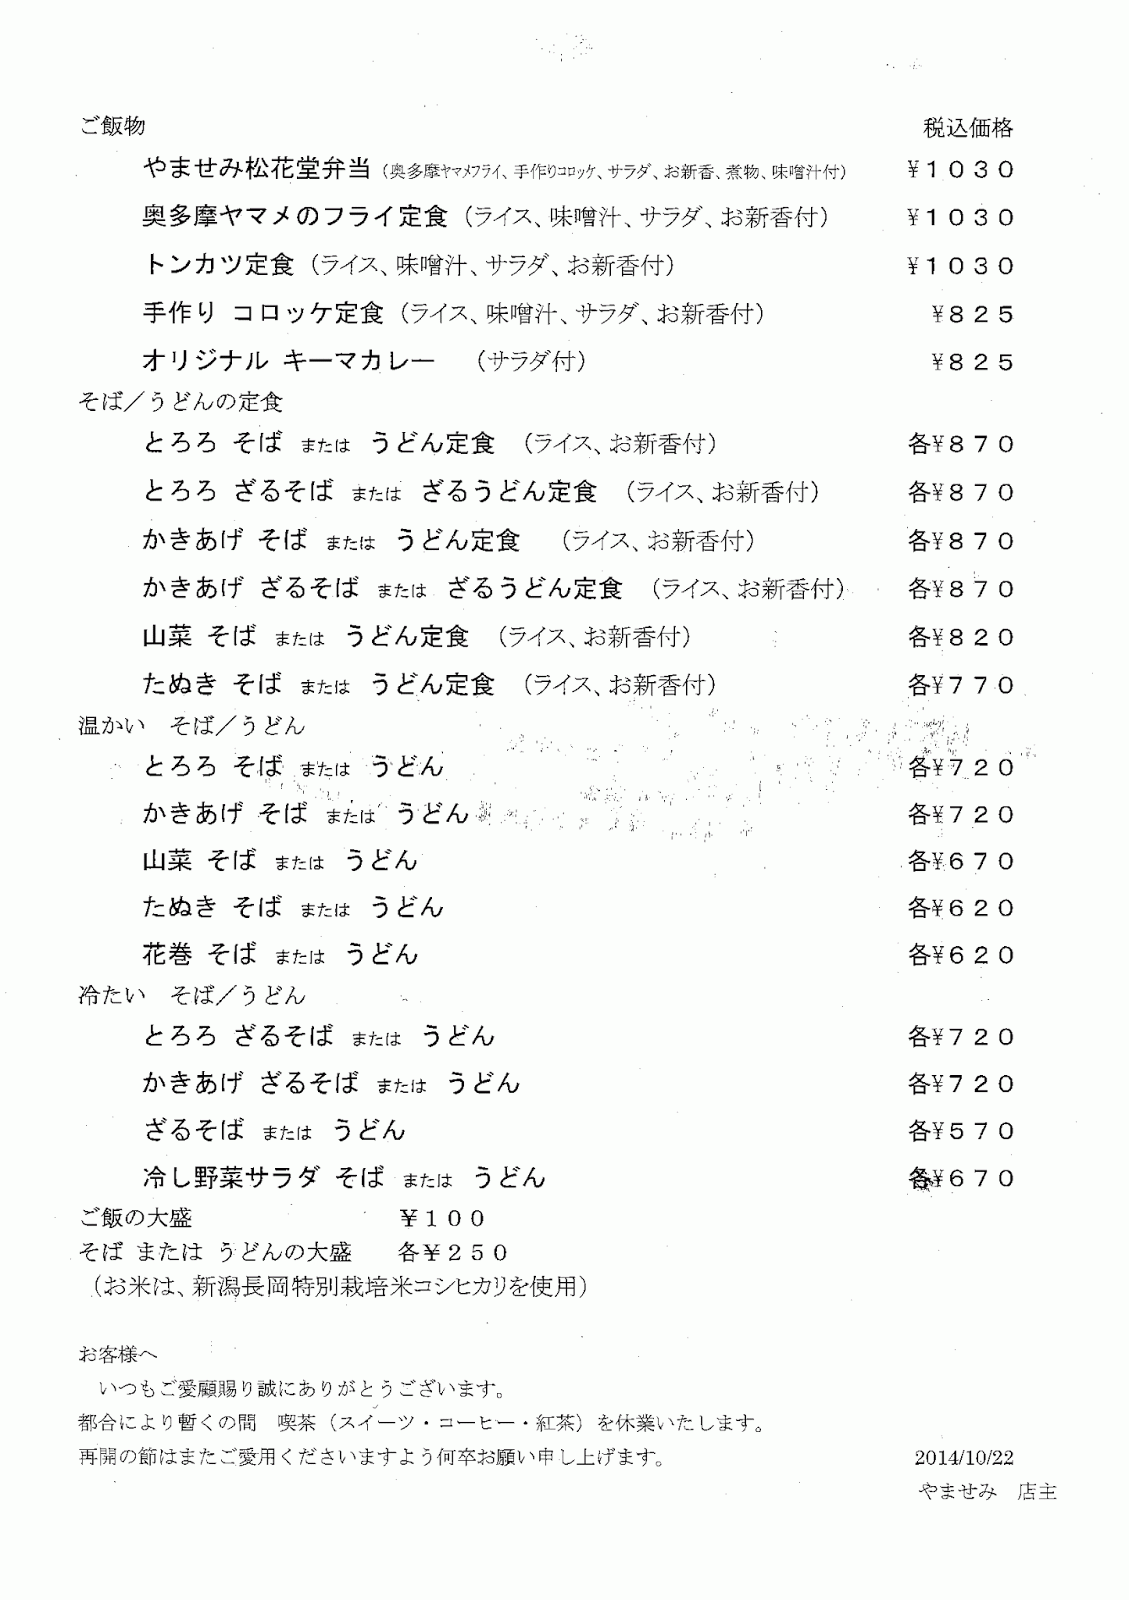 http://www.yamafuru.com/restaurant/restaurant_rinjimenu.pdf